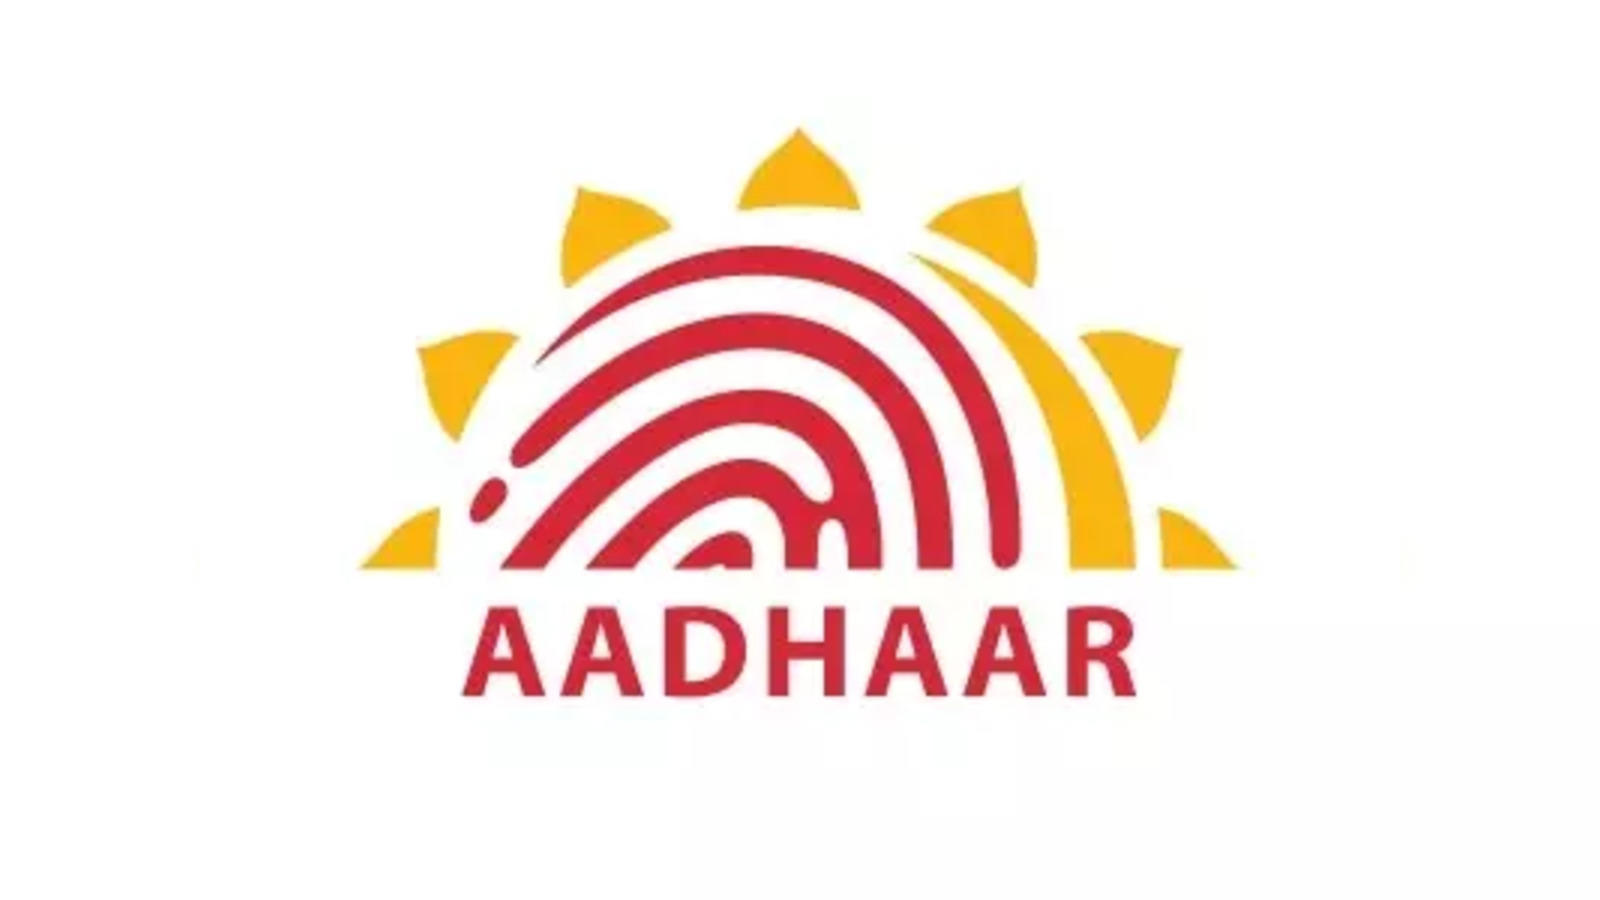 Aadhaar Biometric Lock : আধার লক করবেন? নয়া ফন্দি প্রতারকদের - police  administration started to warn the common people about cheating by using  aadhar biometric information - eisamay